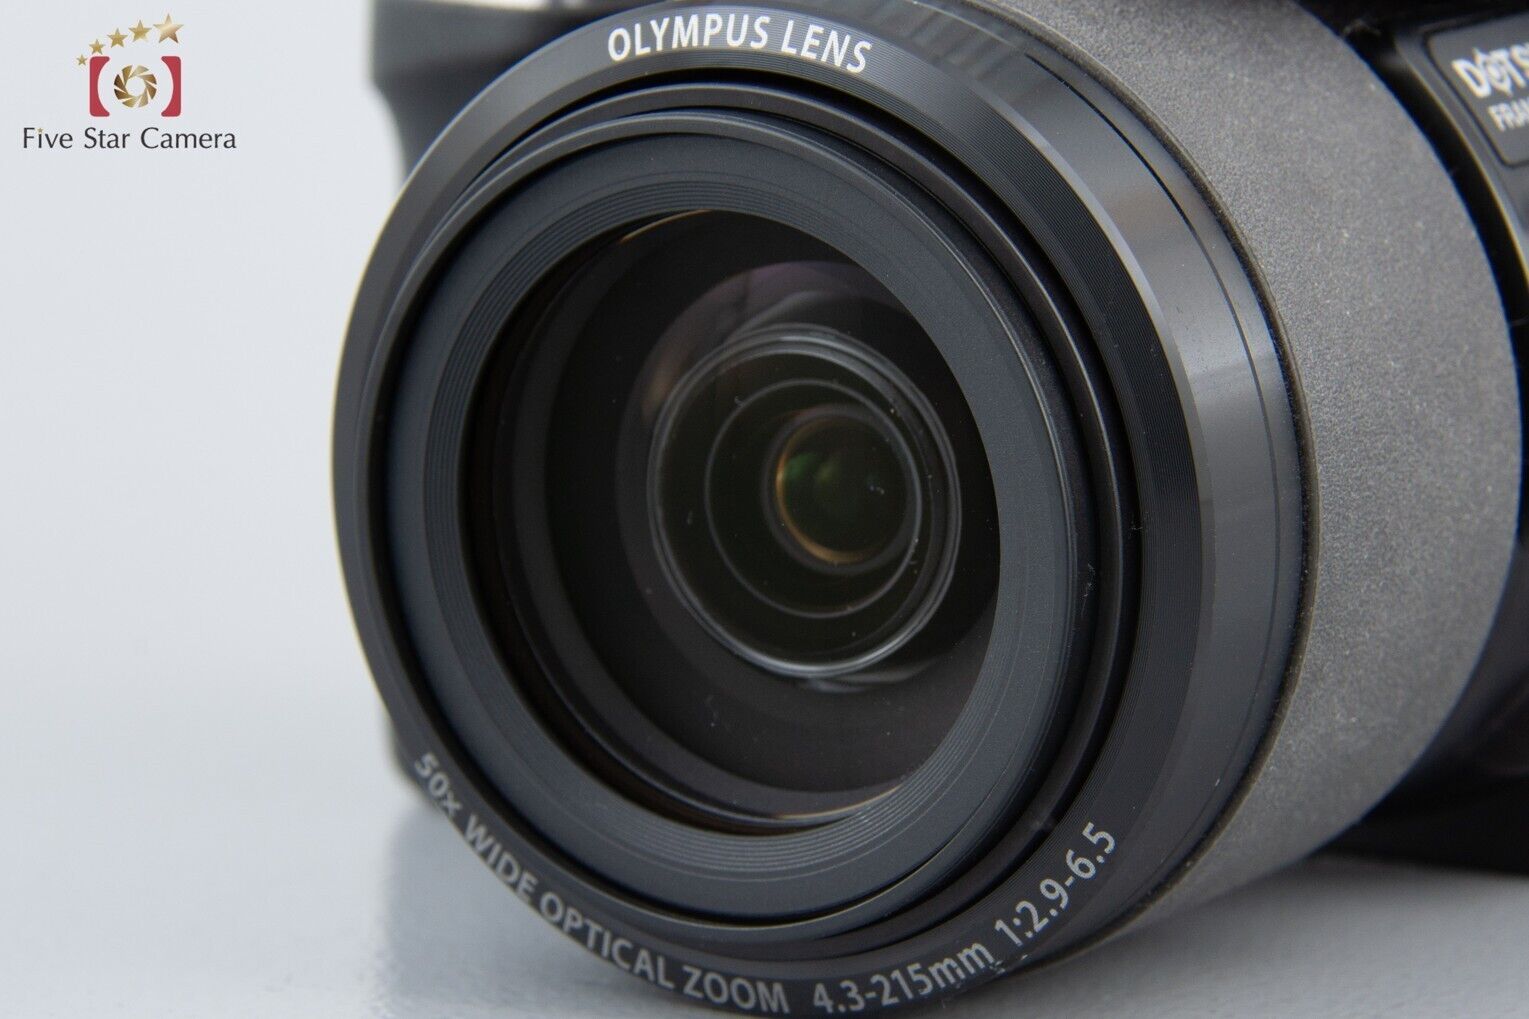 Olympus Stylus SP-100EE 16.0 MP Digital Camera